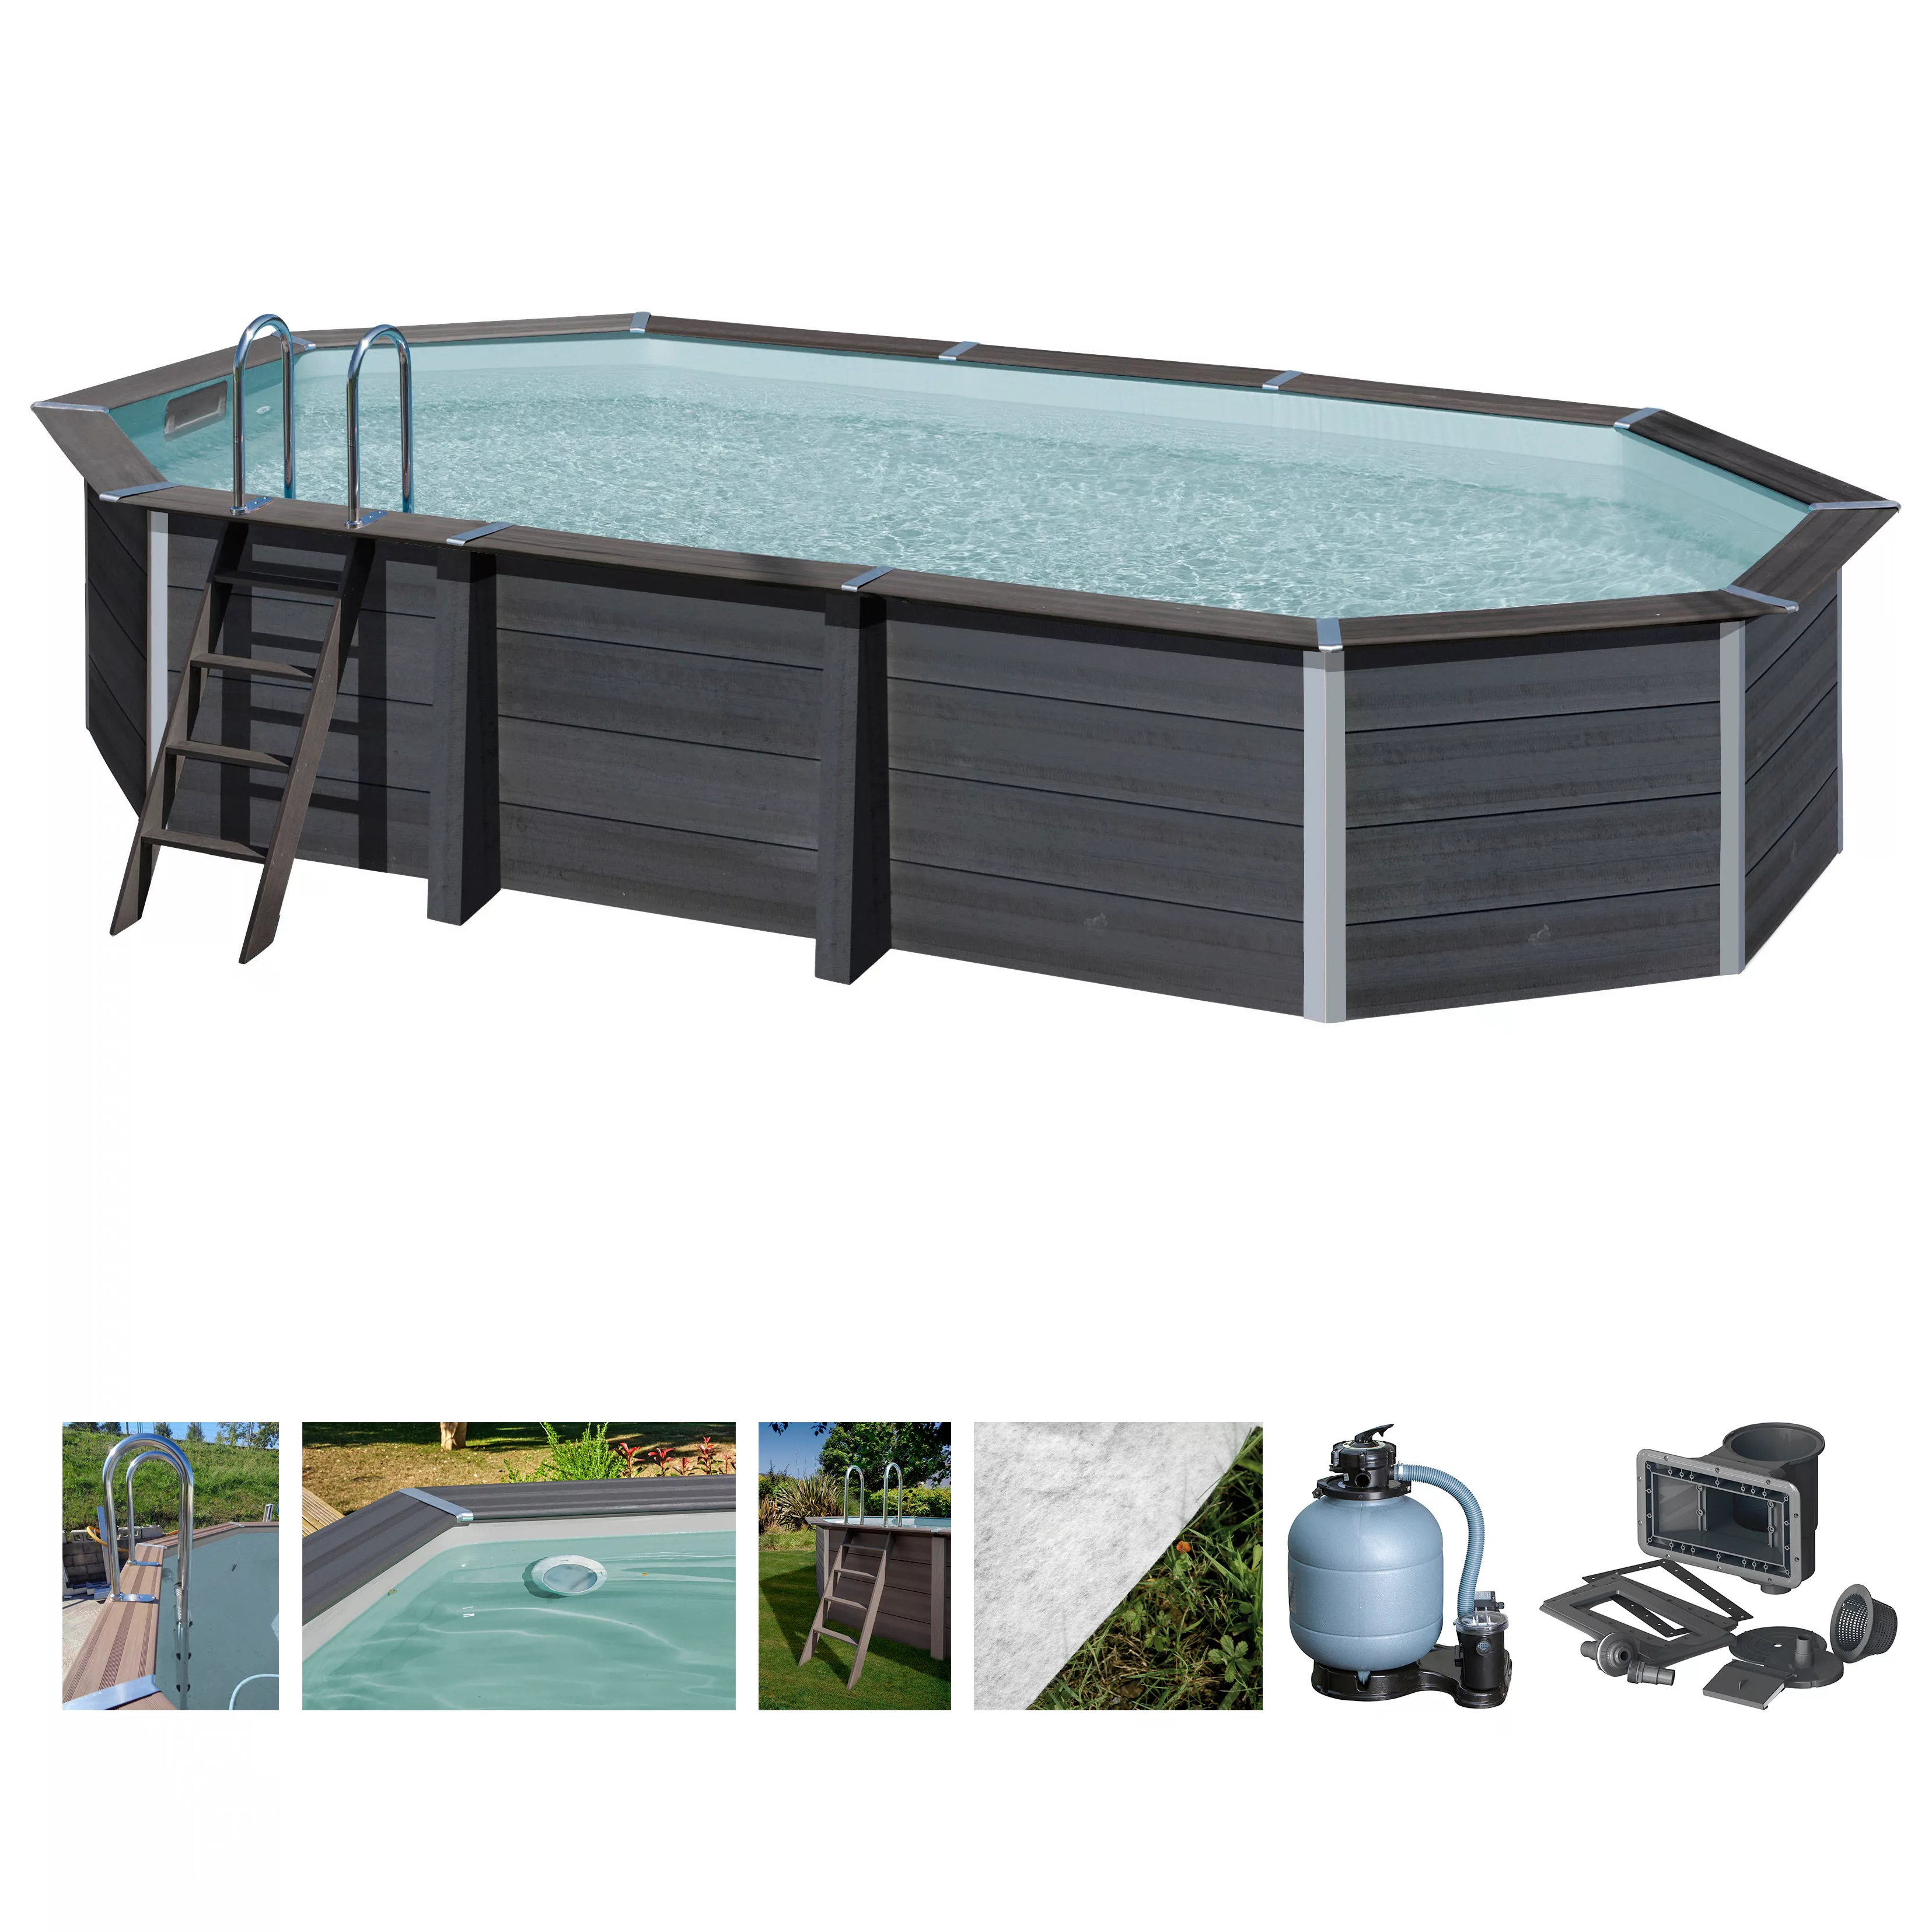 Gre Composite Pool Avantgarde Oval 664 cm x 386 cm x 124 cm m. Beleuchtung günstig online kaufen